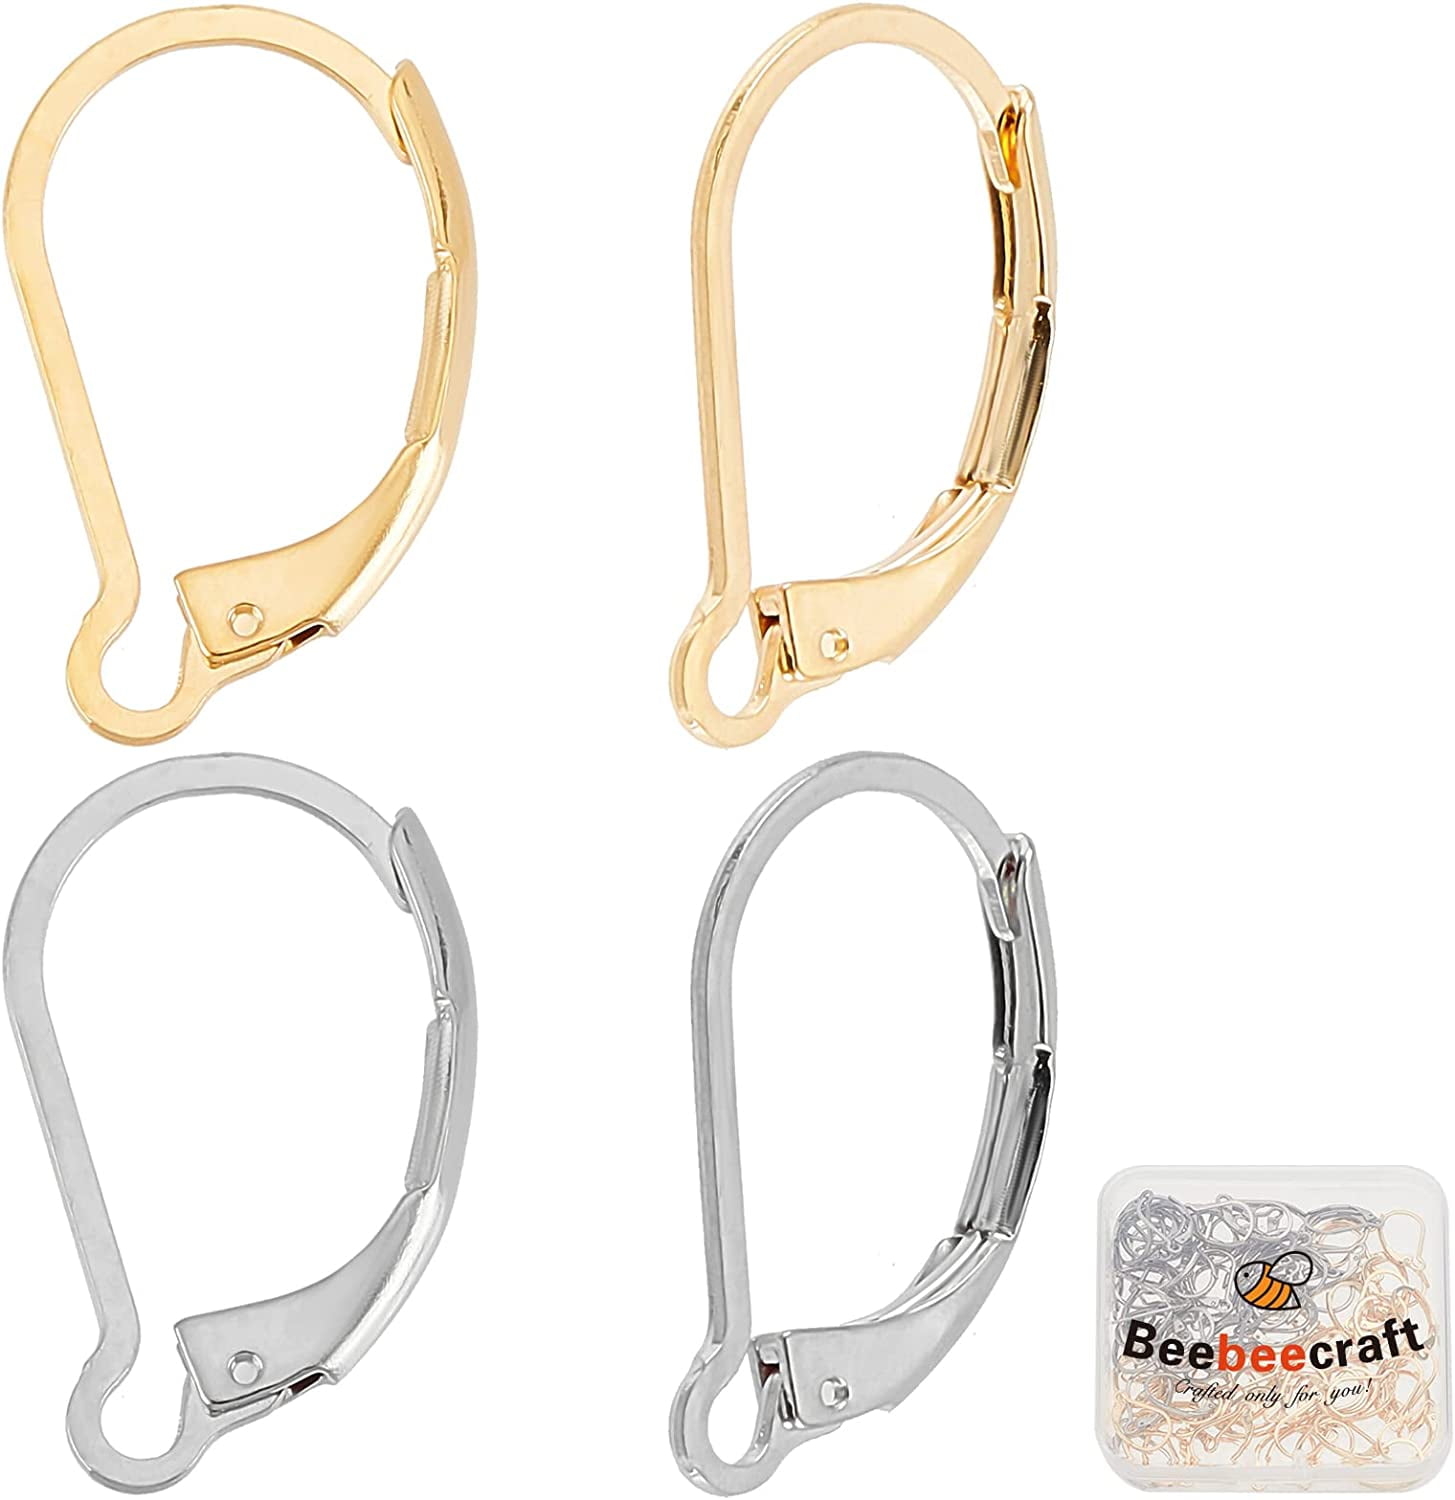 Buy Changeable Hoop Earrings With 10 Pairs of Charms, Everyday Earrings, Interchangeable  Earrings, Sterling Silver and Gold Hoop Earrings Online in India - Etsy